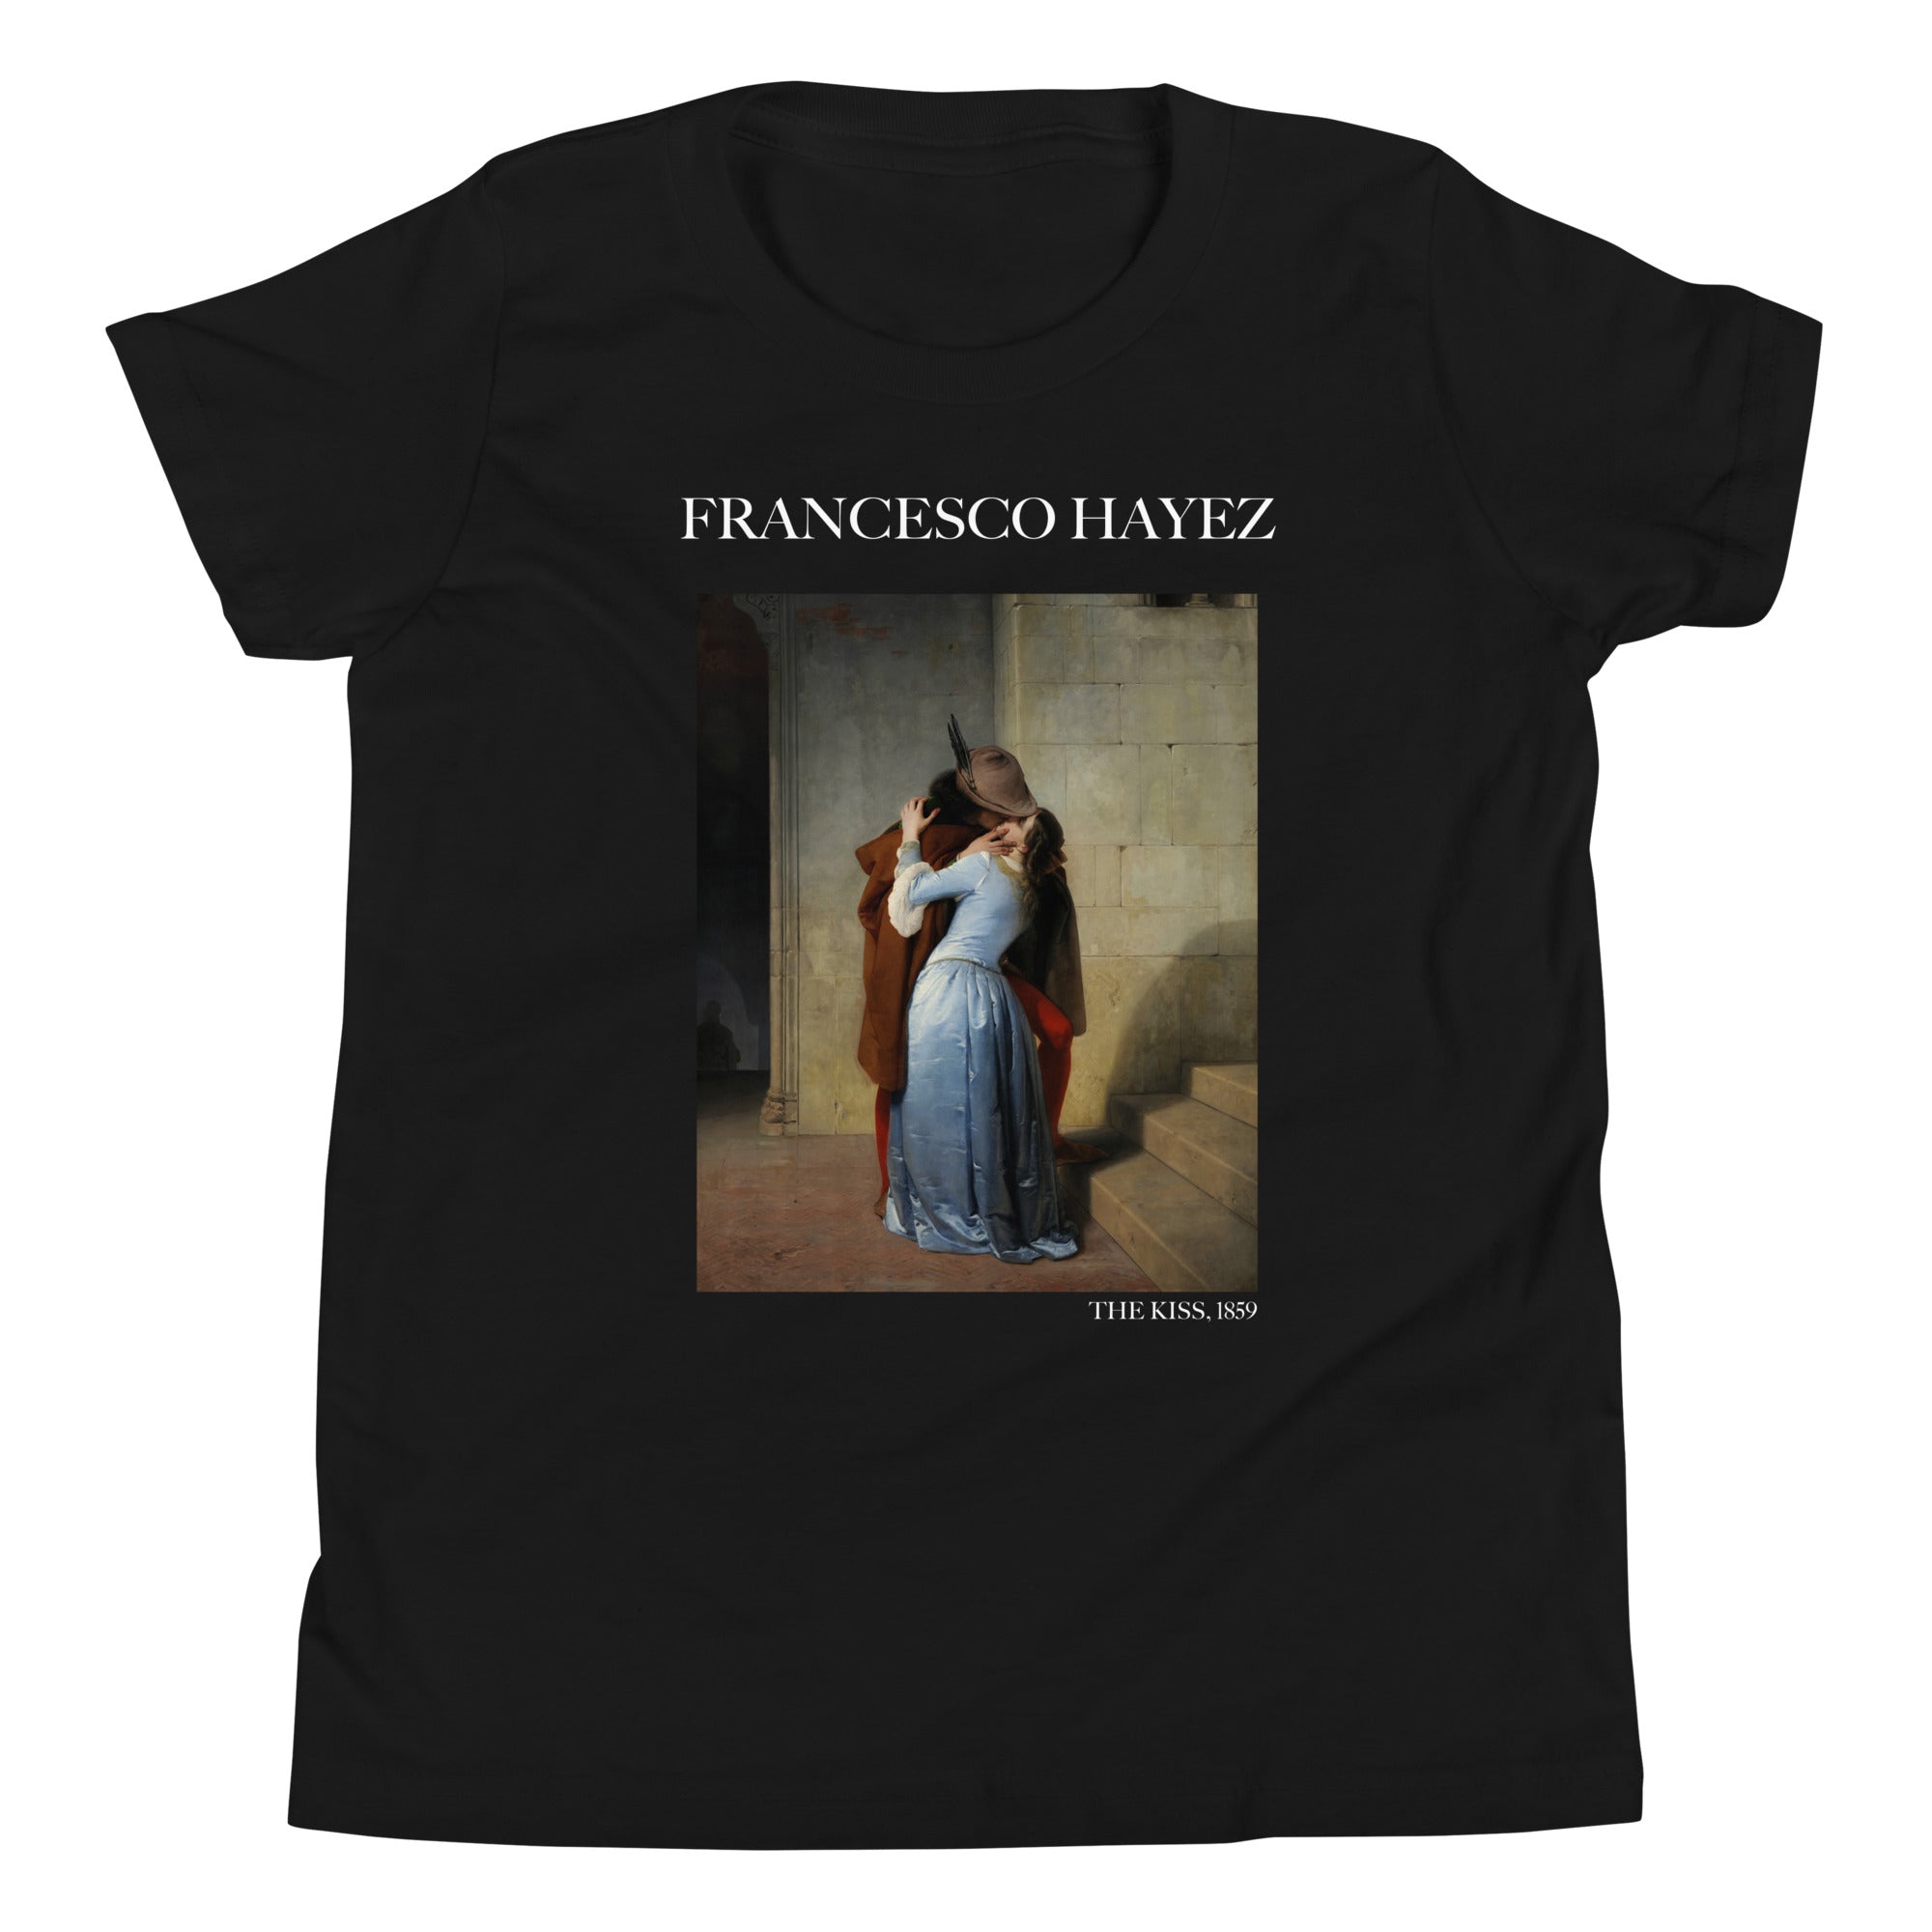 Francesco Hayez 'The Kiss' Famous Painting Short Sleeve T-Shirt | Premium Youth Art Tee